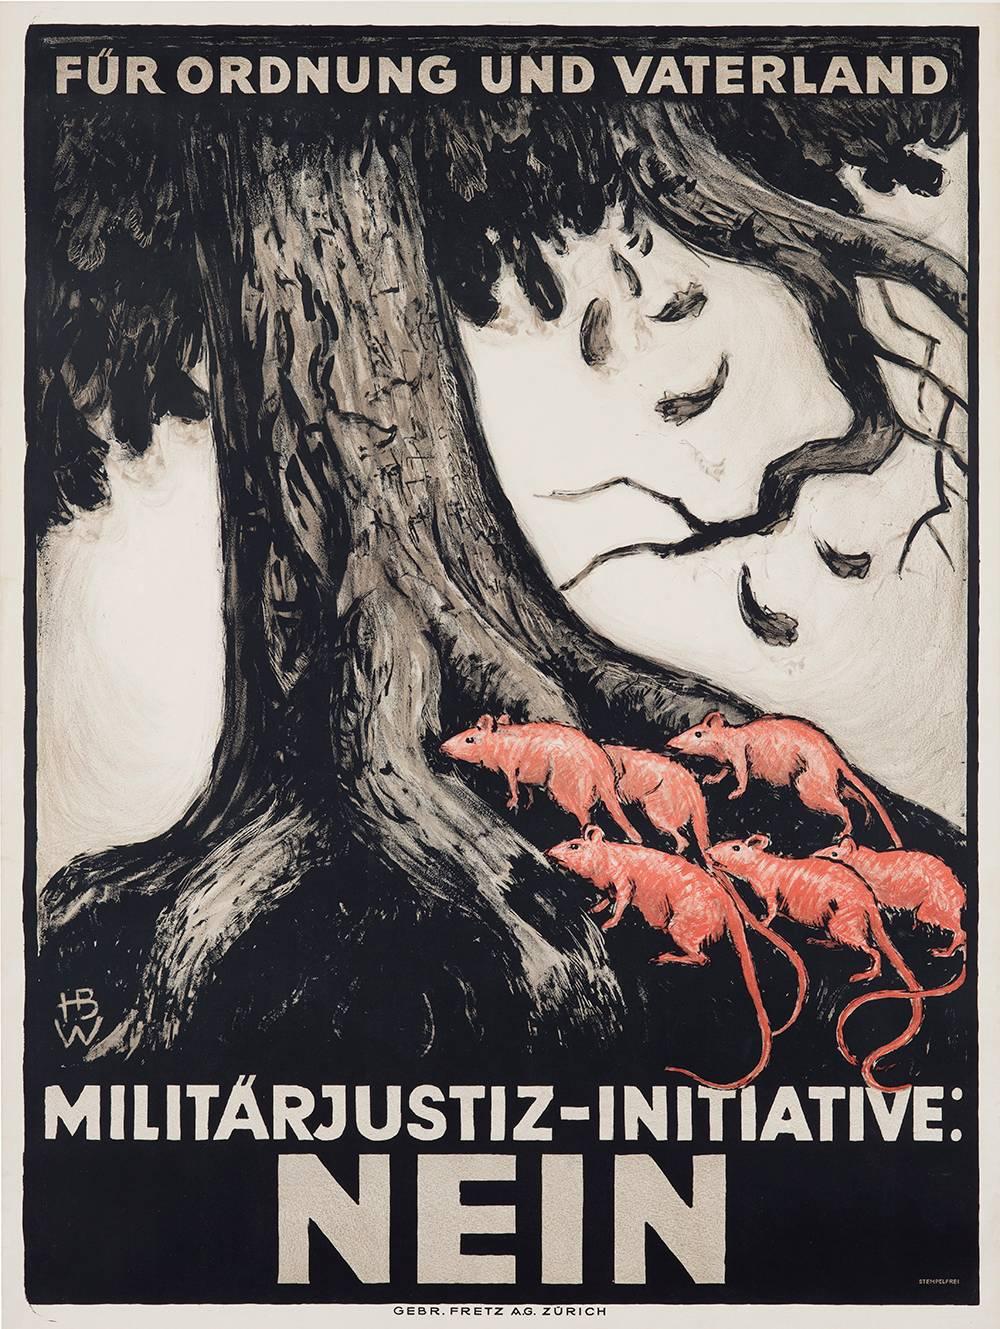 Militärjustiz-Initiative: NEIN, German Anti-Communism poster c. 1921 - Print by Hans Beat Wieland